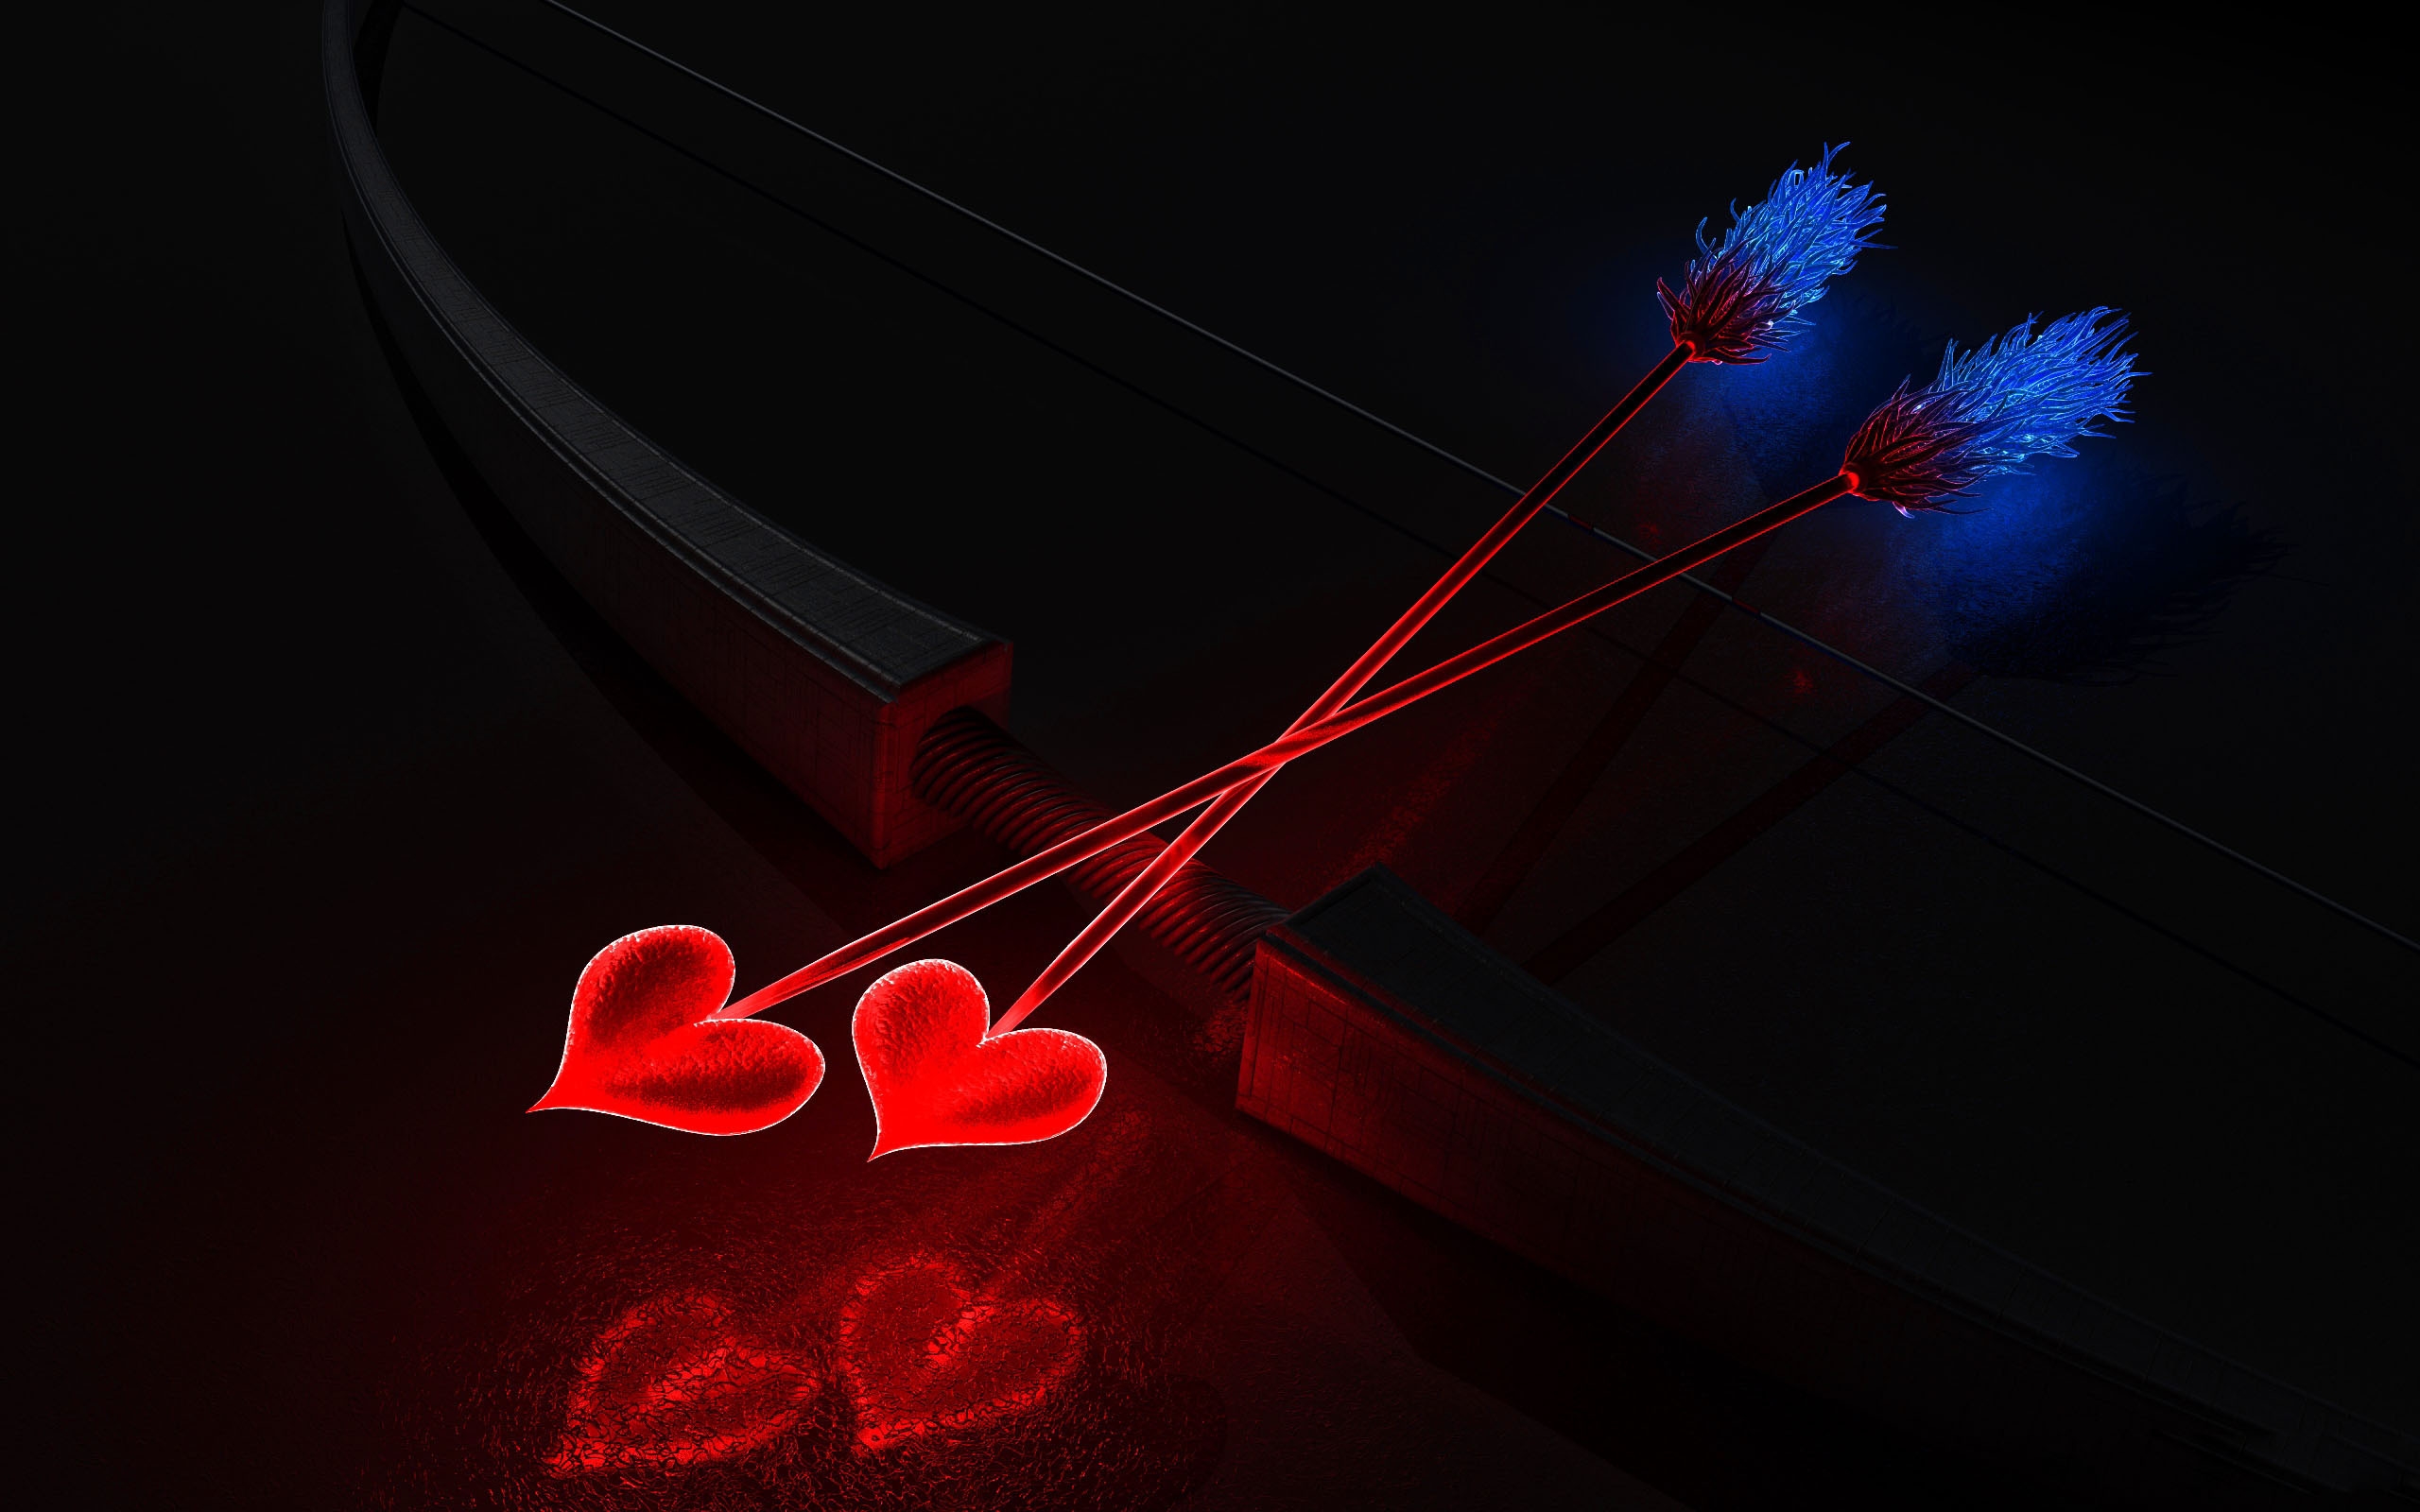 Artistic desktop wallpaper with a love-themed arrow design.